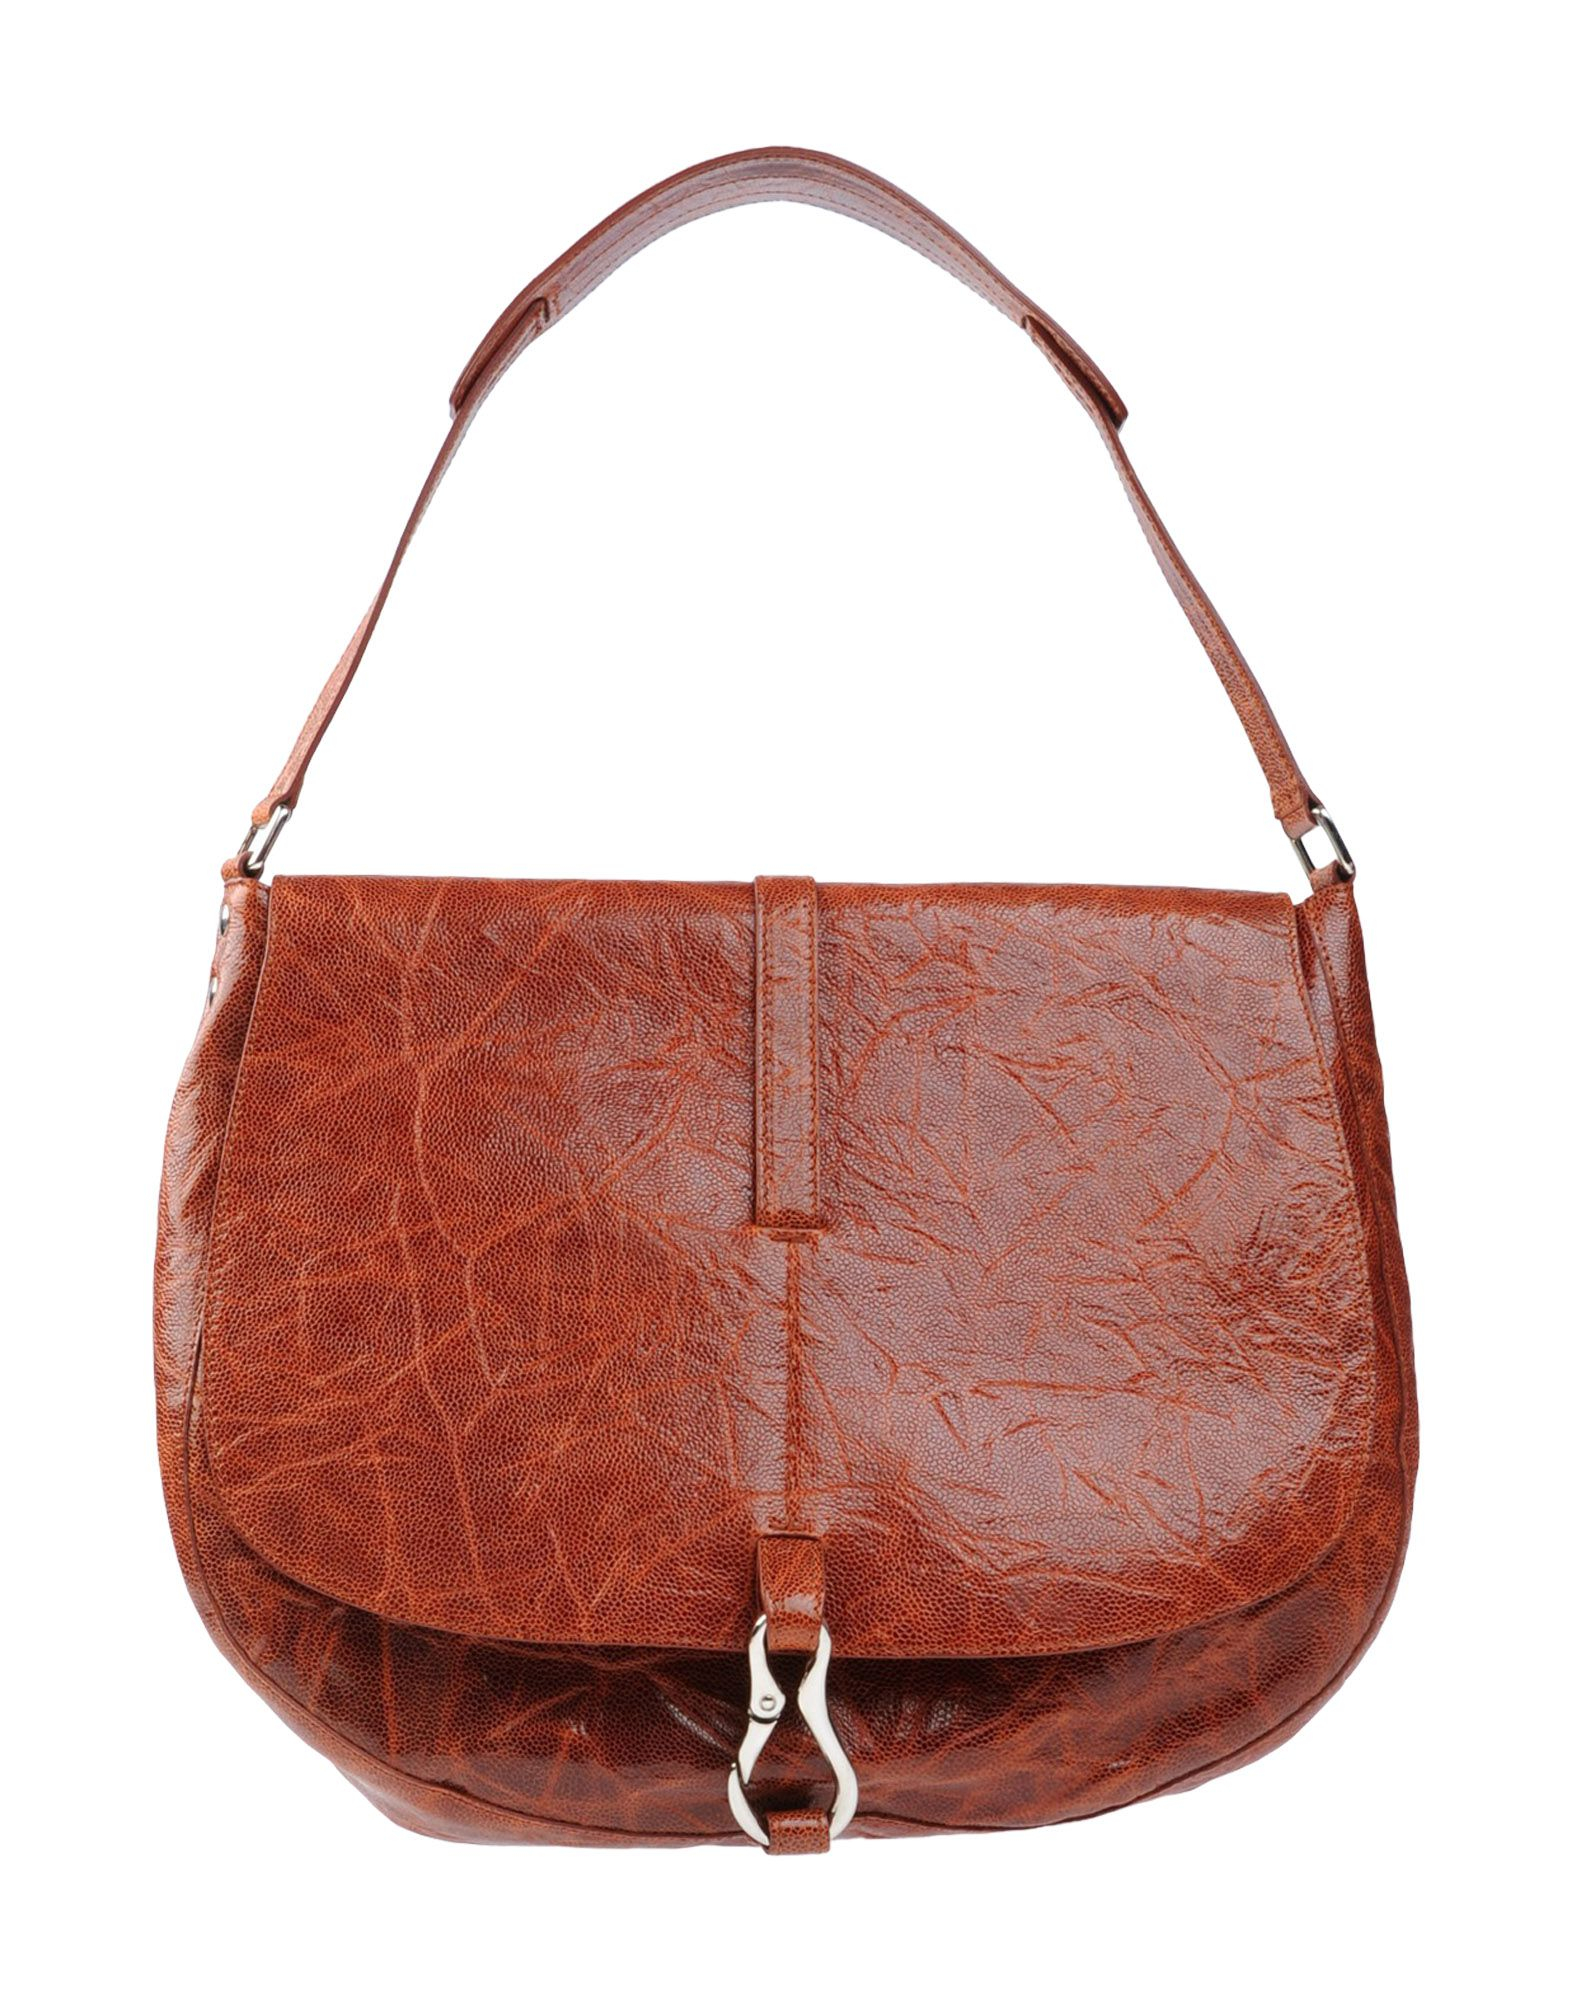 Orciani Shoulder Bag in Brown - Save 78% | Lyst